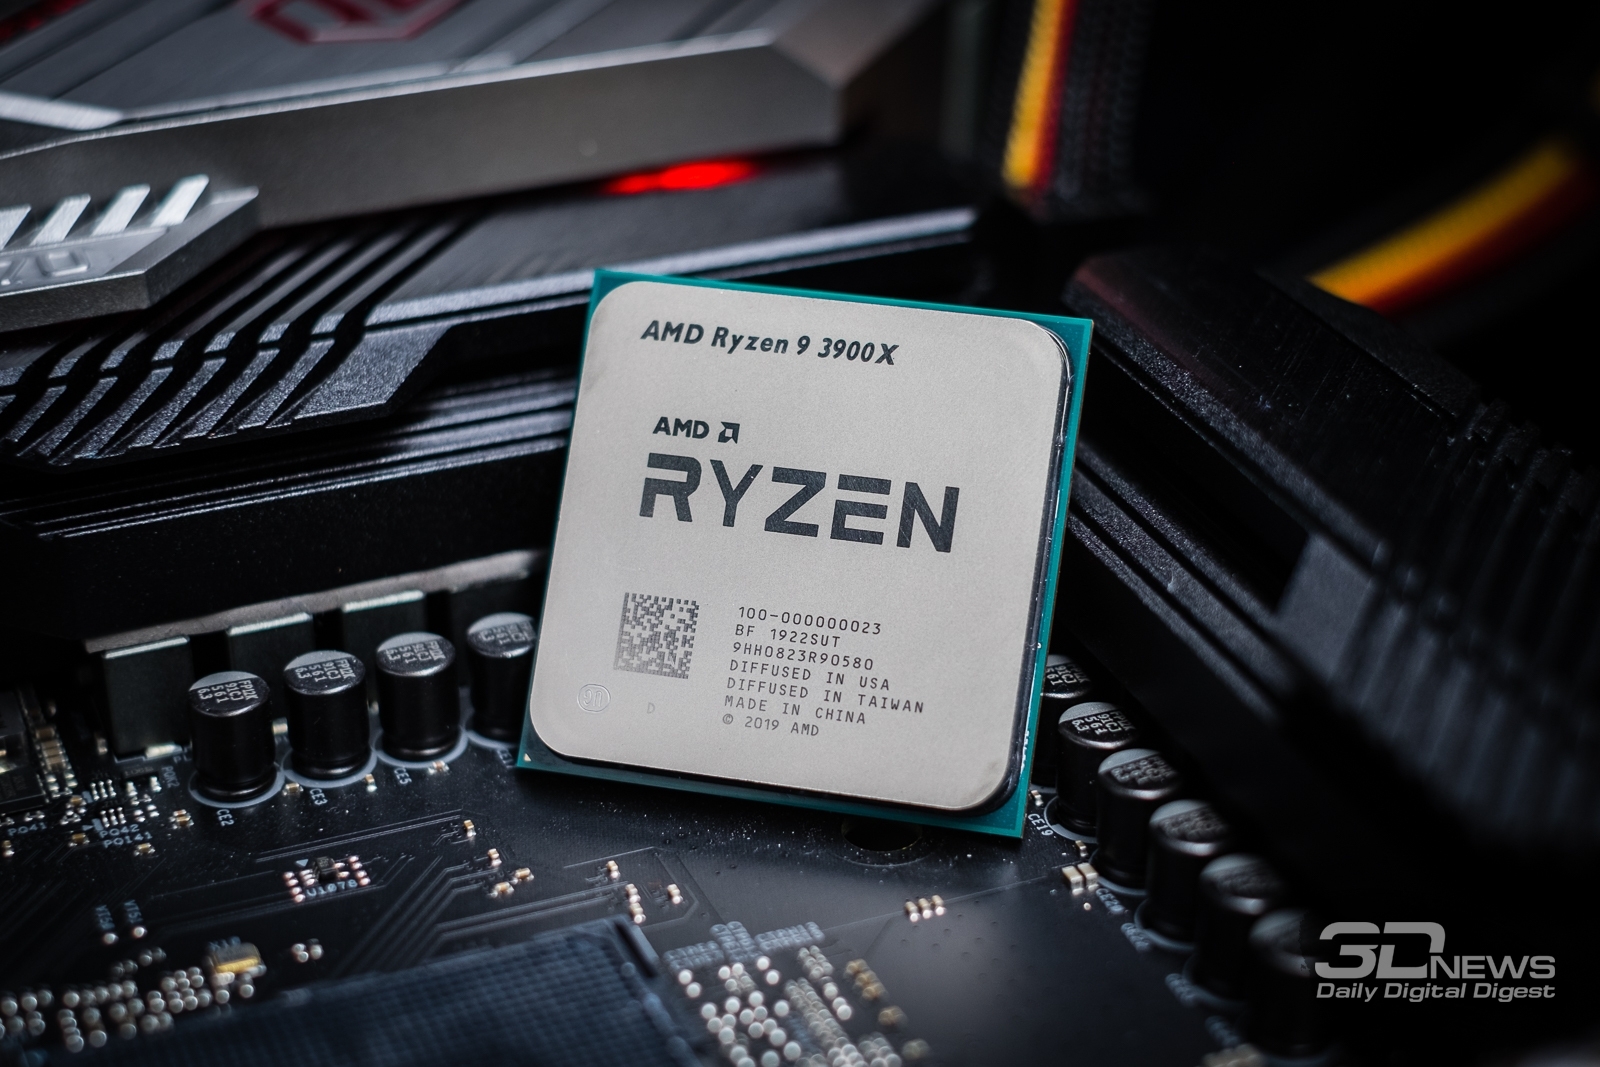 9 3900x купить. Ryzen 9 3900x. Процессор АМД 9 3900. Процессор Ryzen 9 3900x. AMD Ryzen 9 3900x 12-Core Processor.